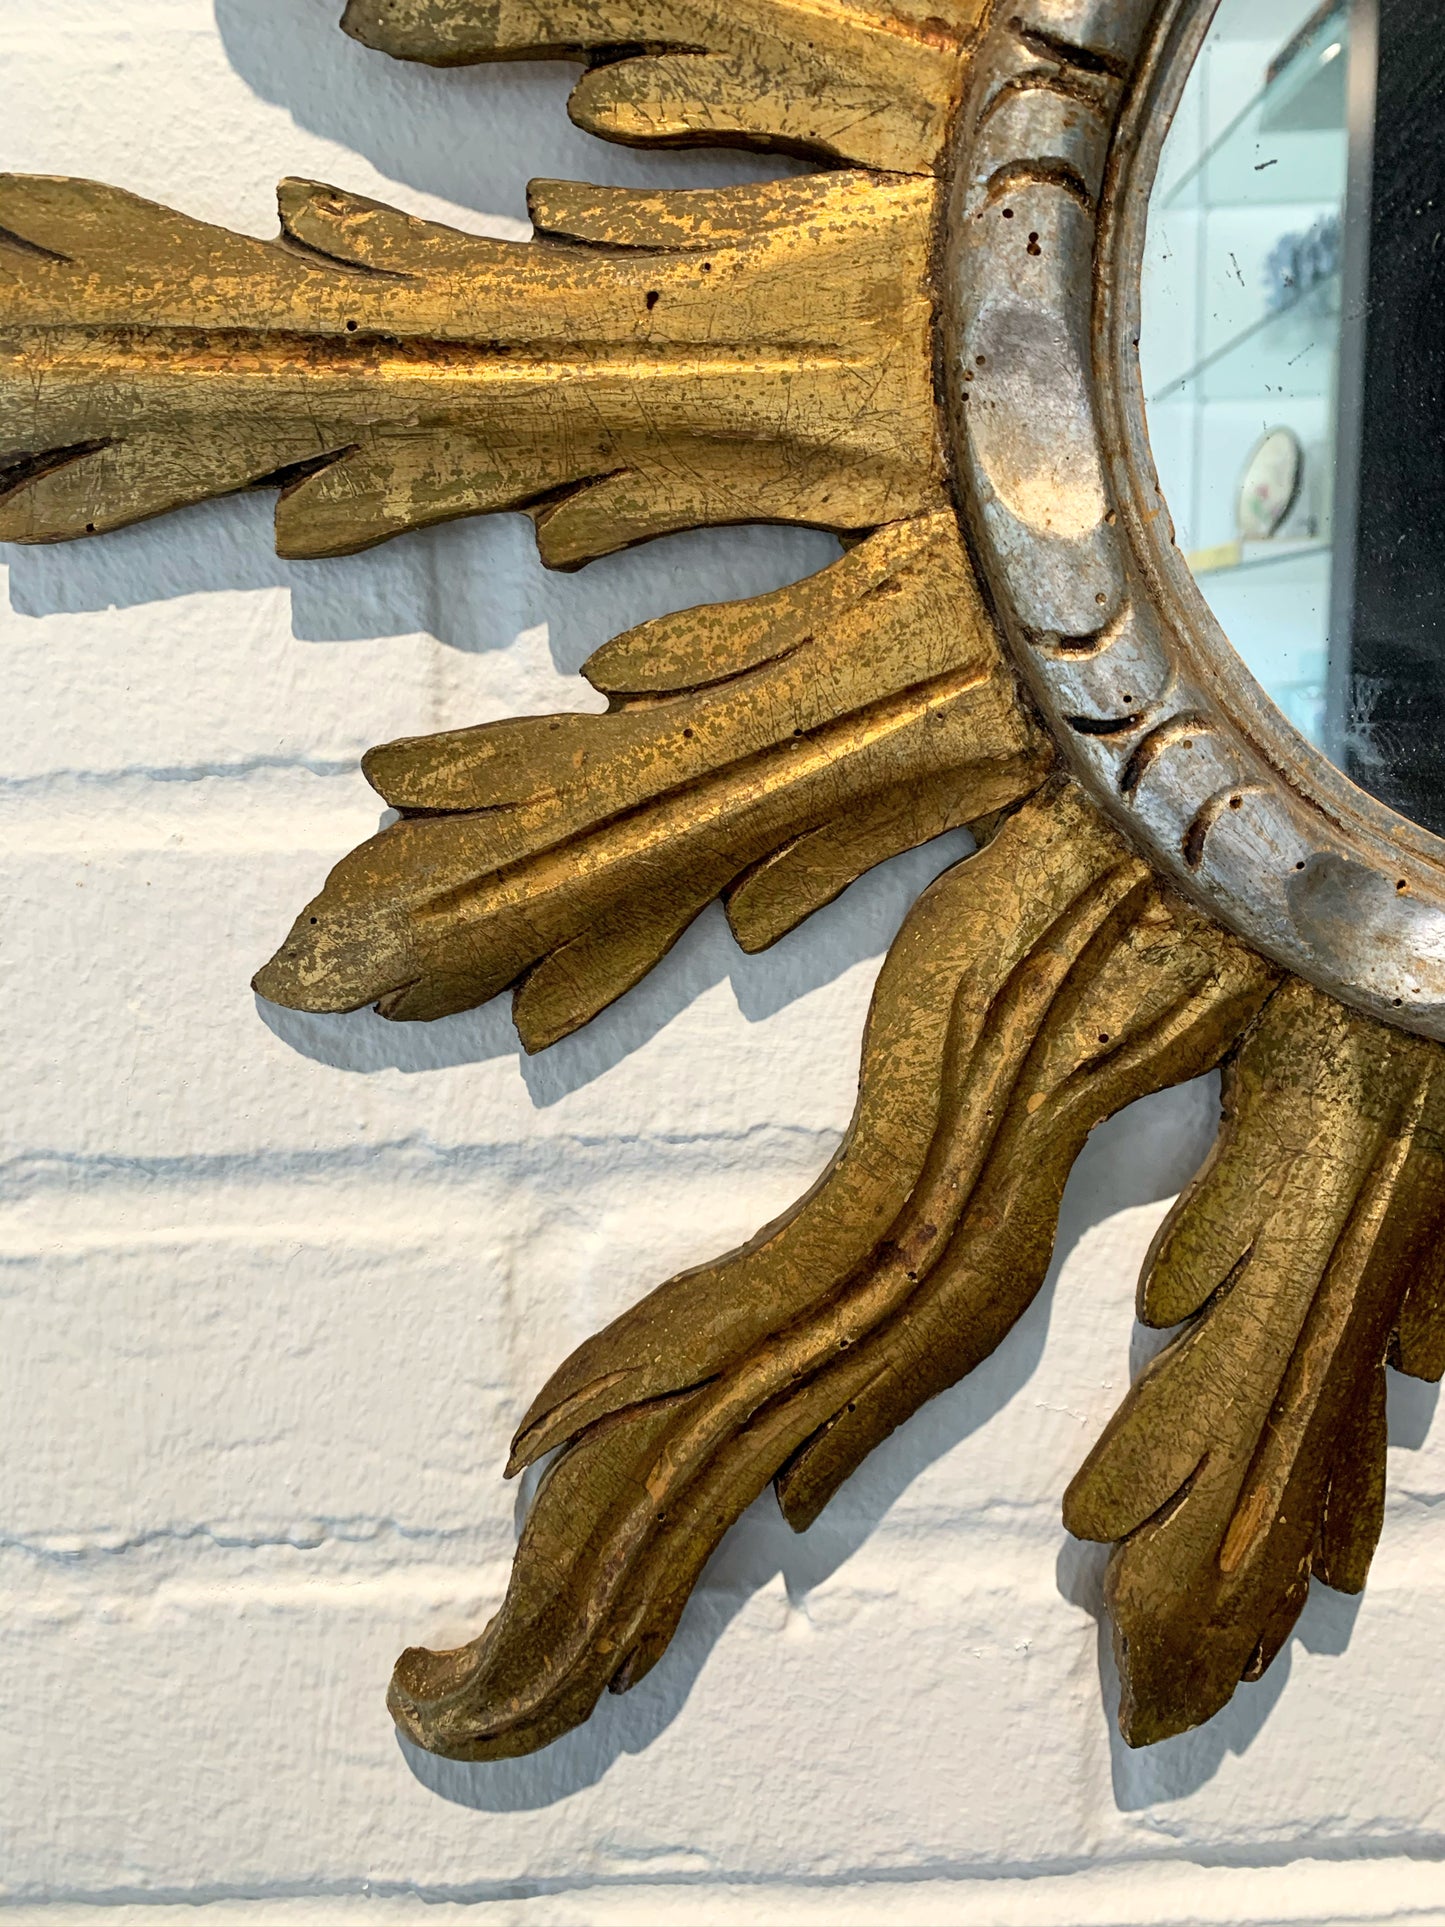 Antique Gold and Silver Starburst Mirror